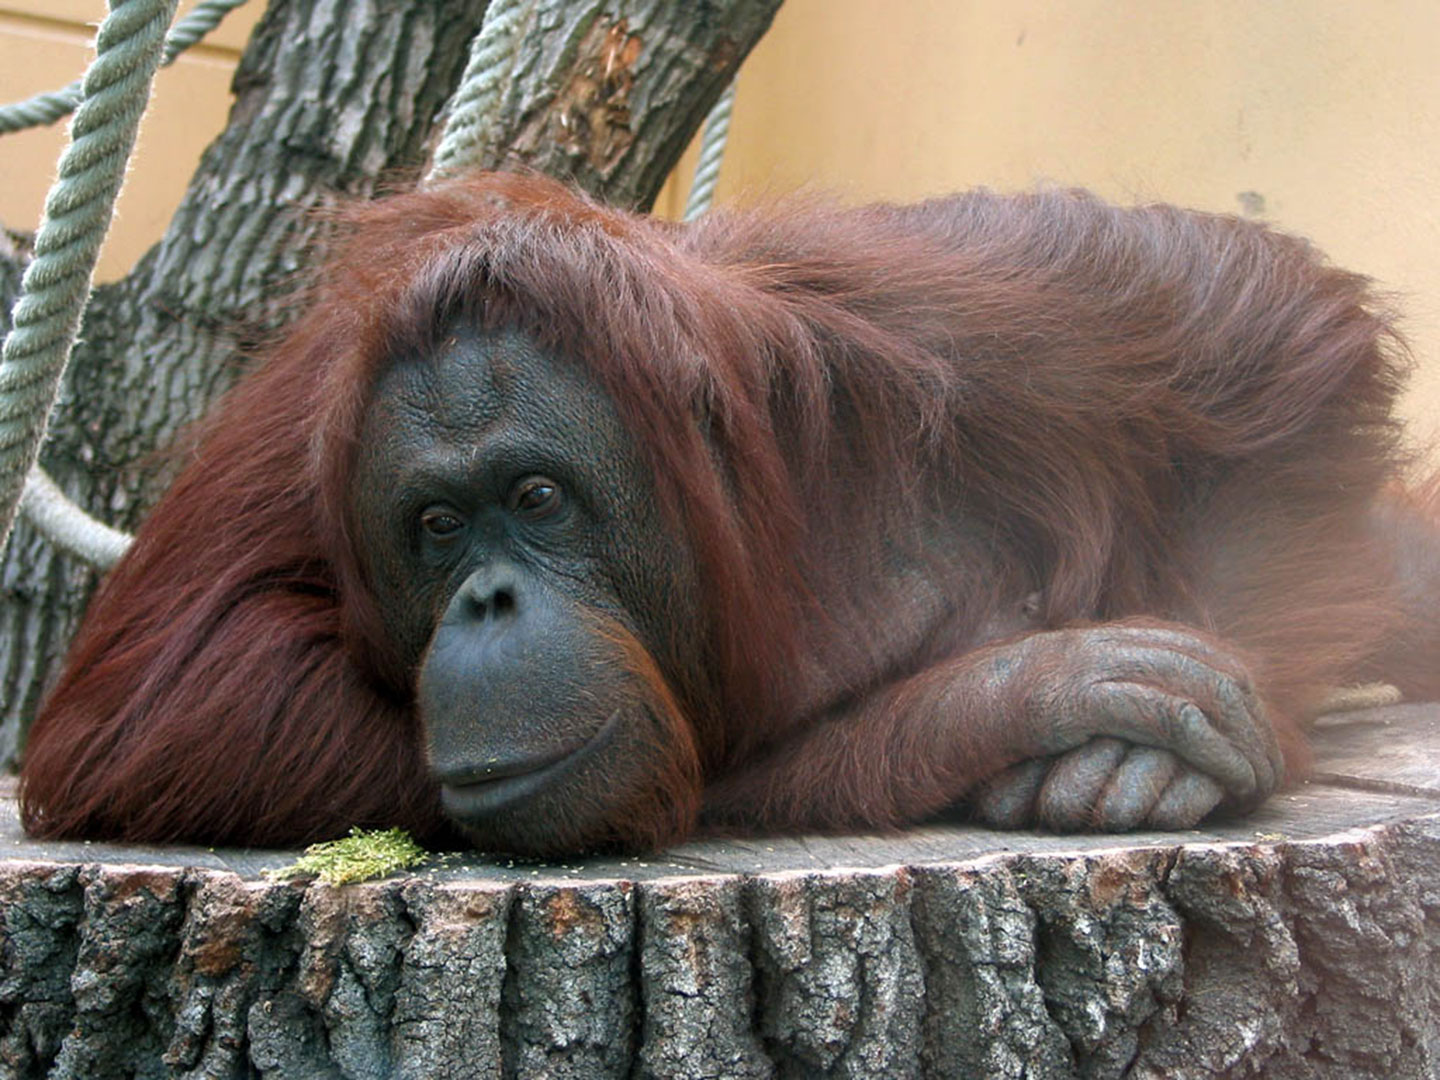 An orangutan laying on a tree trunk